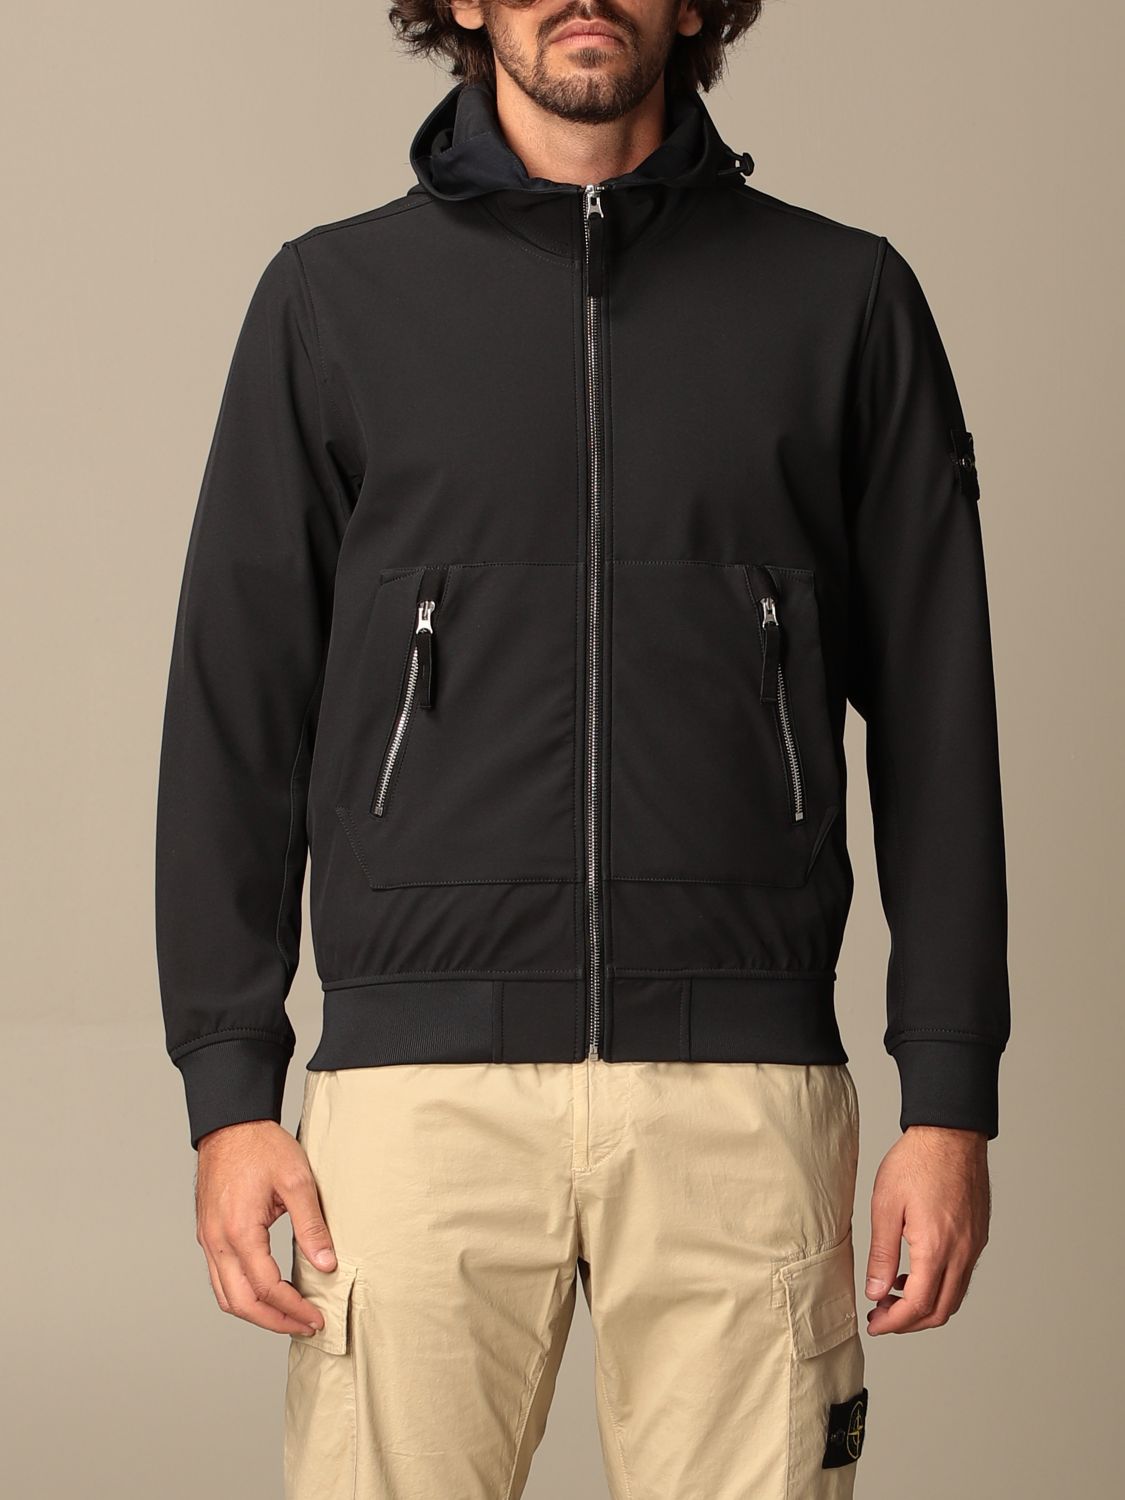 STONE ISLAND: soft shell light e-dye jacket with hood - Navy | Jacket